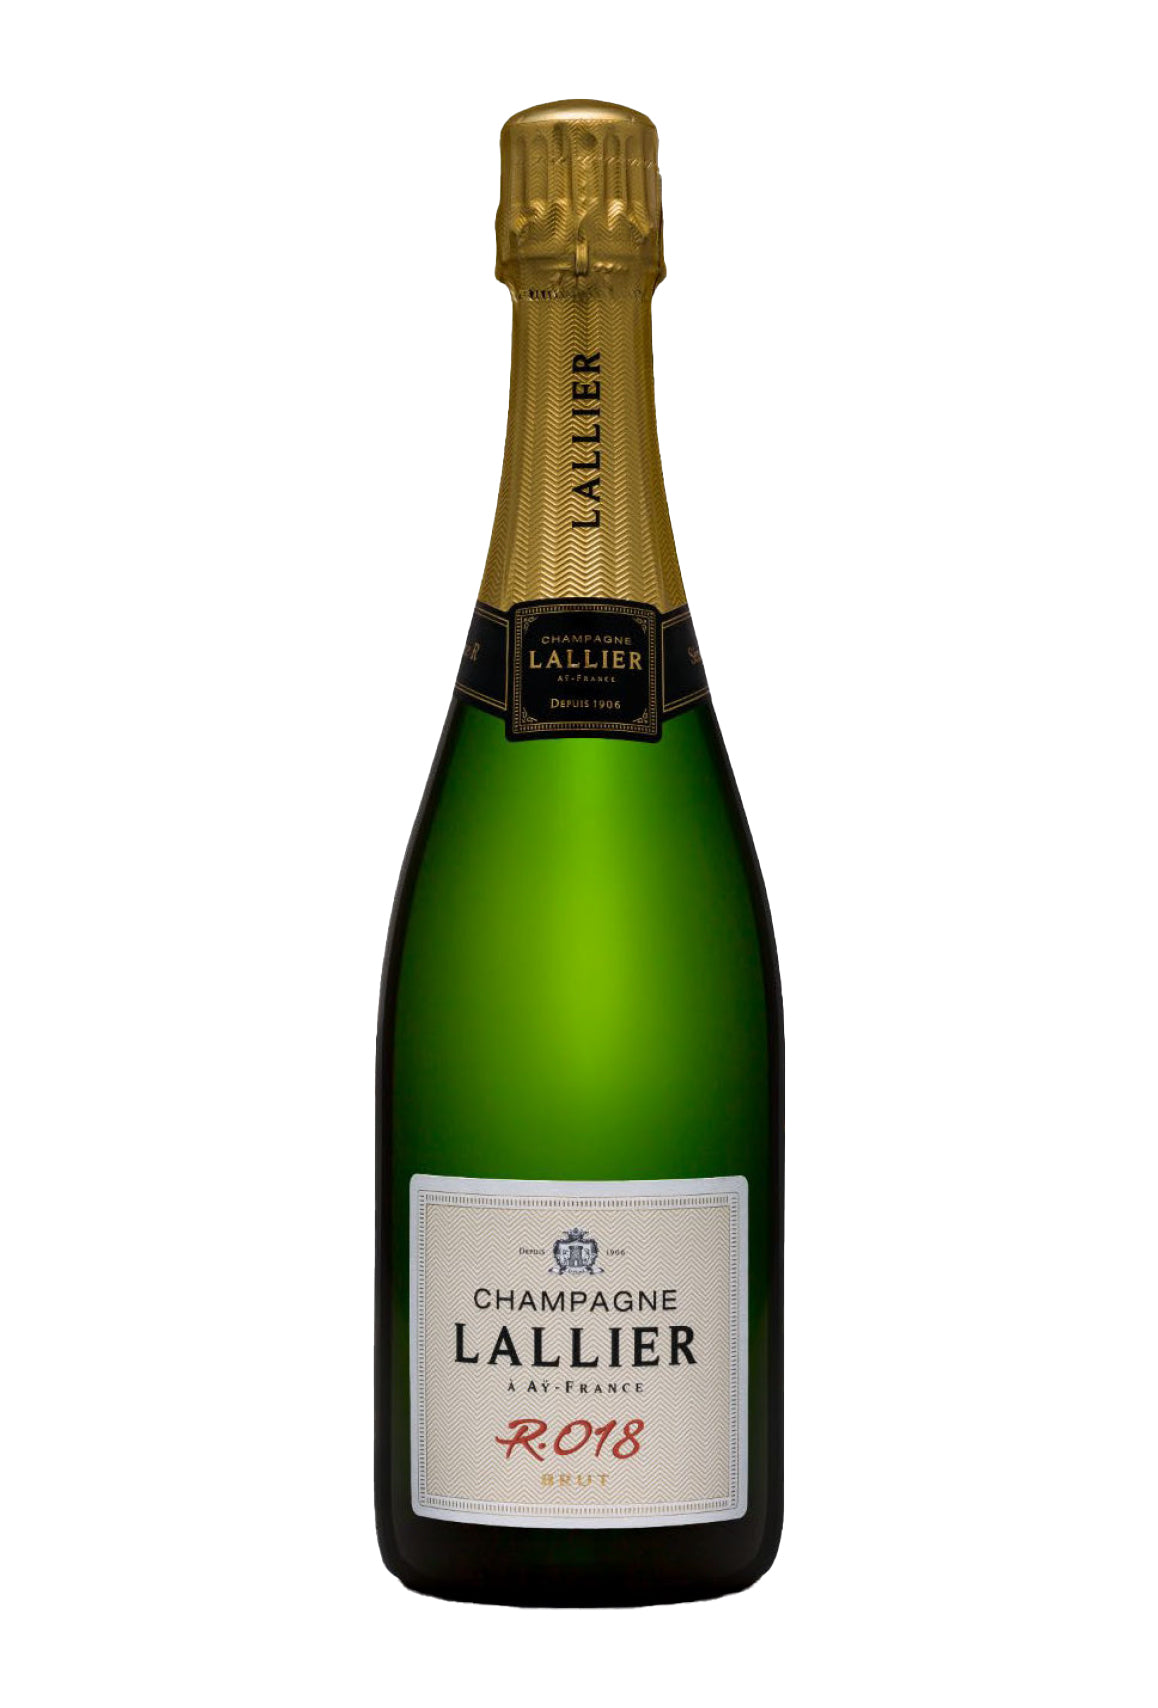 Champagne Lallier Brut R.018 2018 6 Bottle Case 75cl